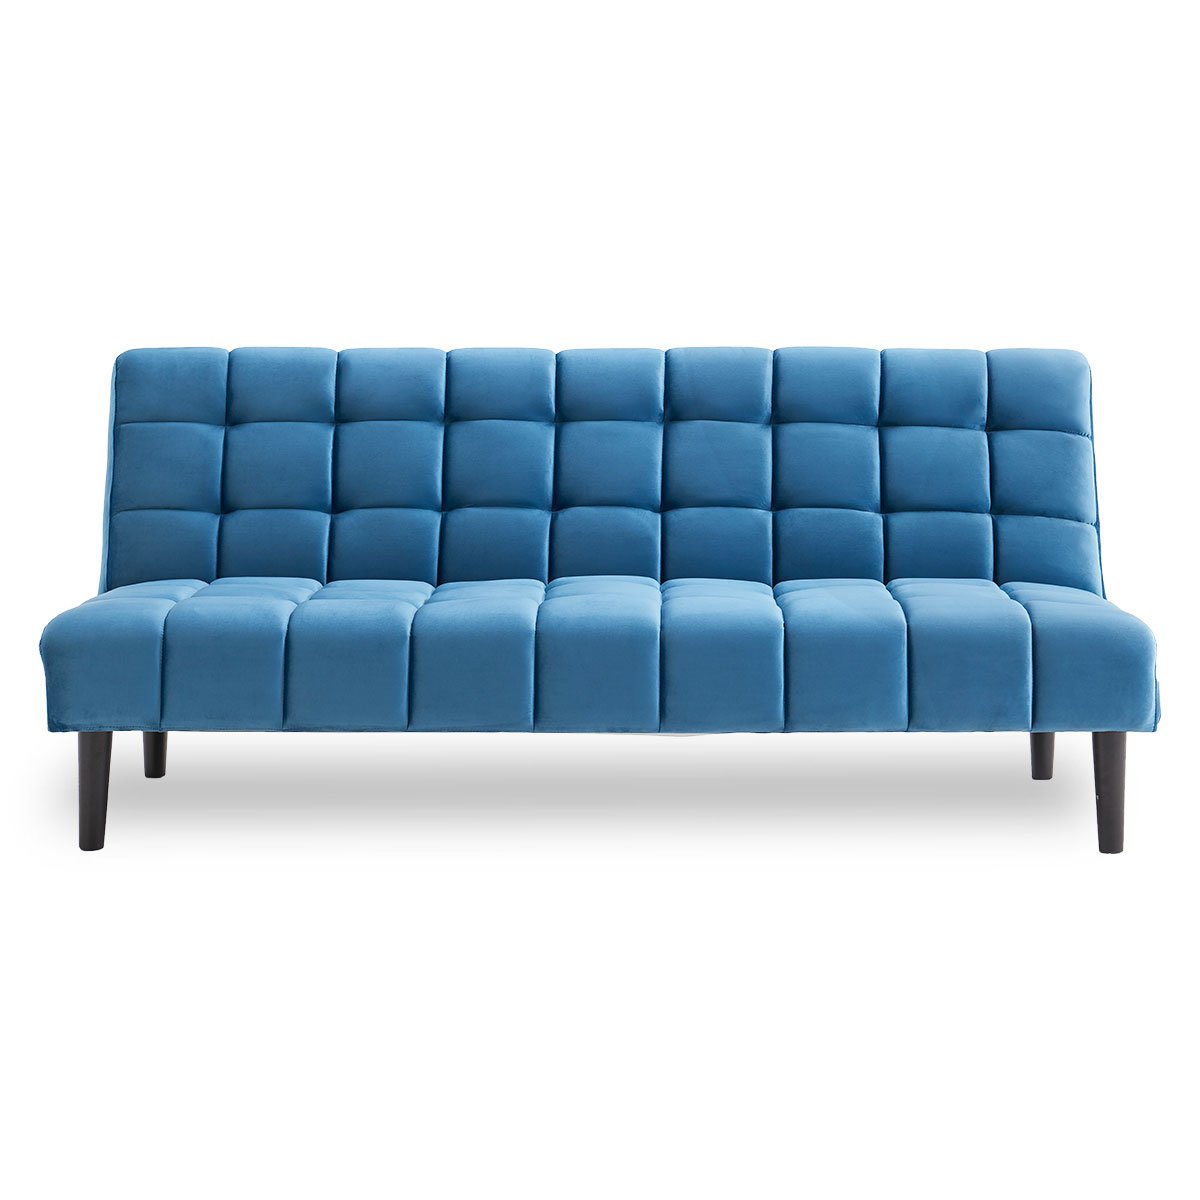 Sarantino Faux Suede Fabric Sofa Bed Furniture Lounge Seat Blue 1